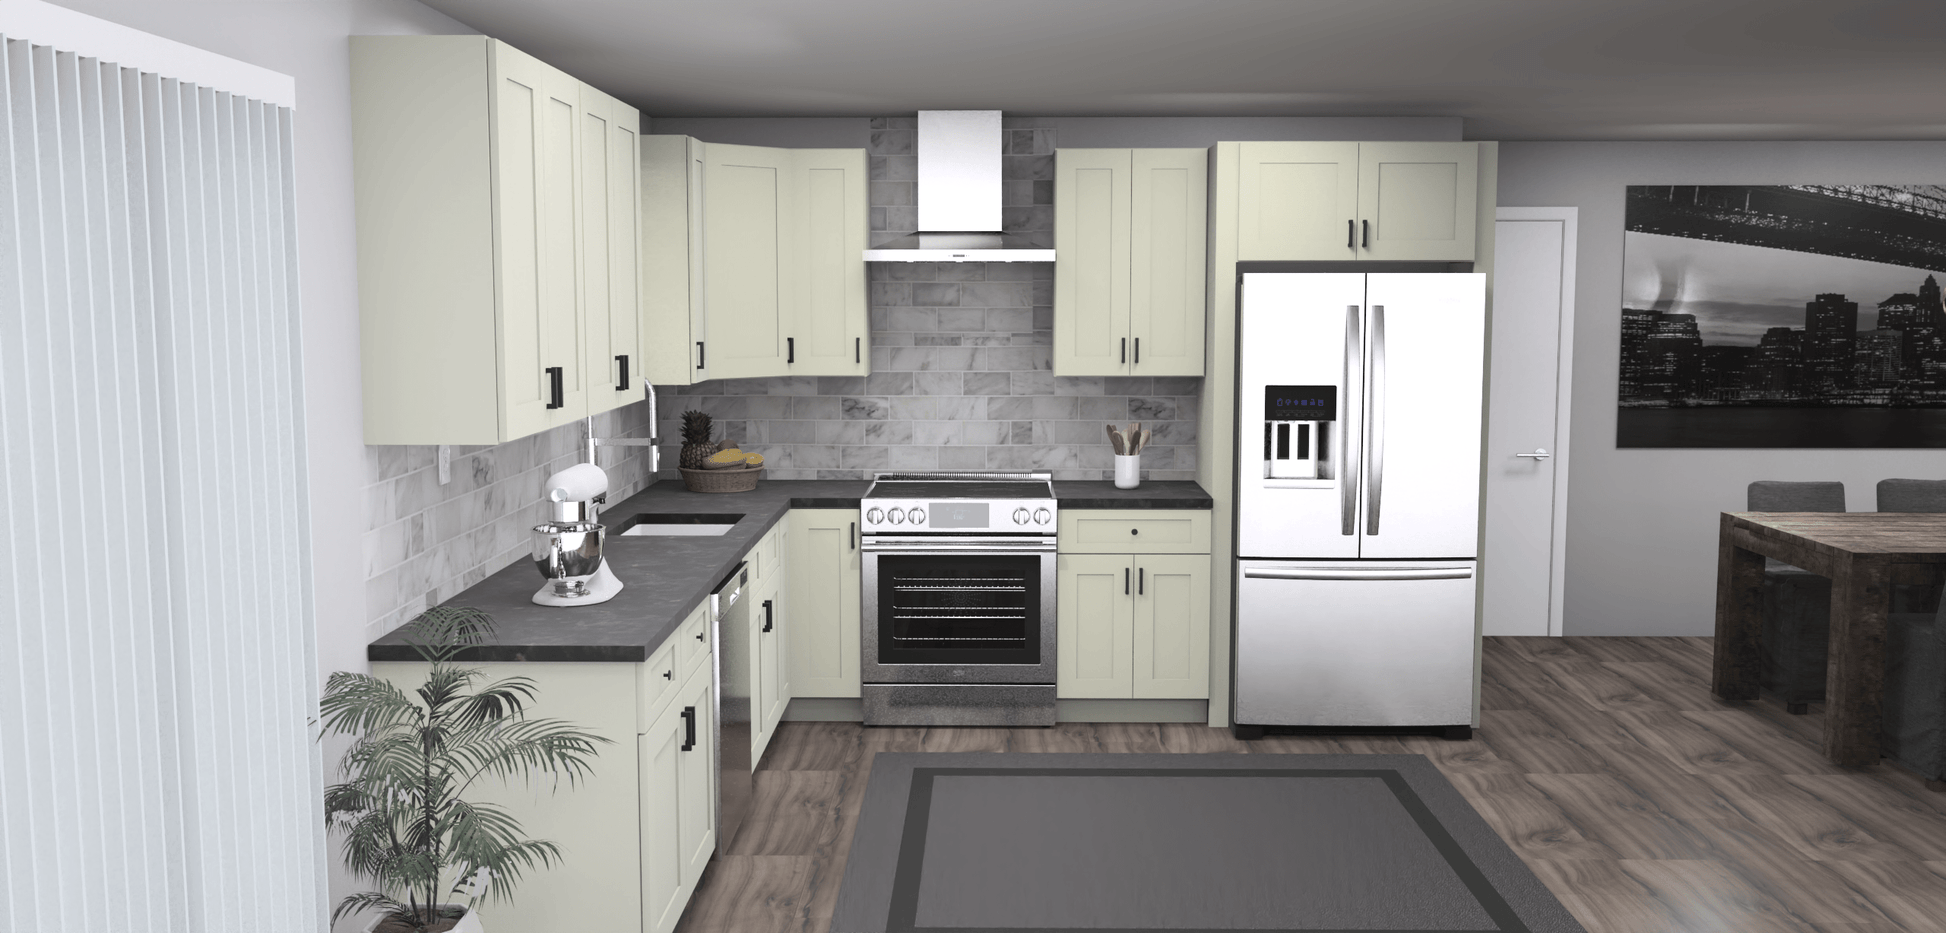 Fabuwood Allure Galaxy Linen 11 x 11 L Shaped Kitchen Front Layout Photo